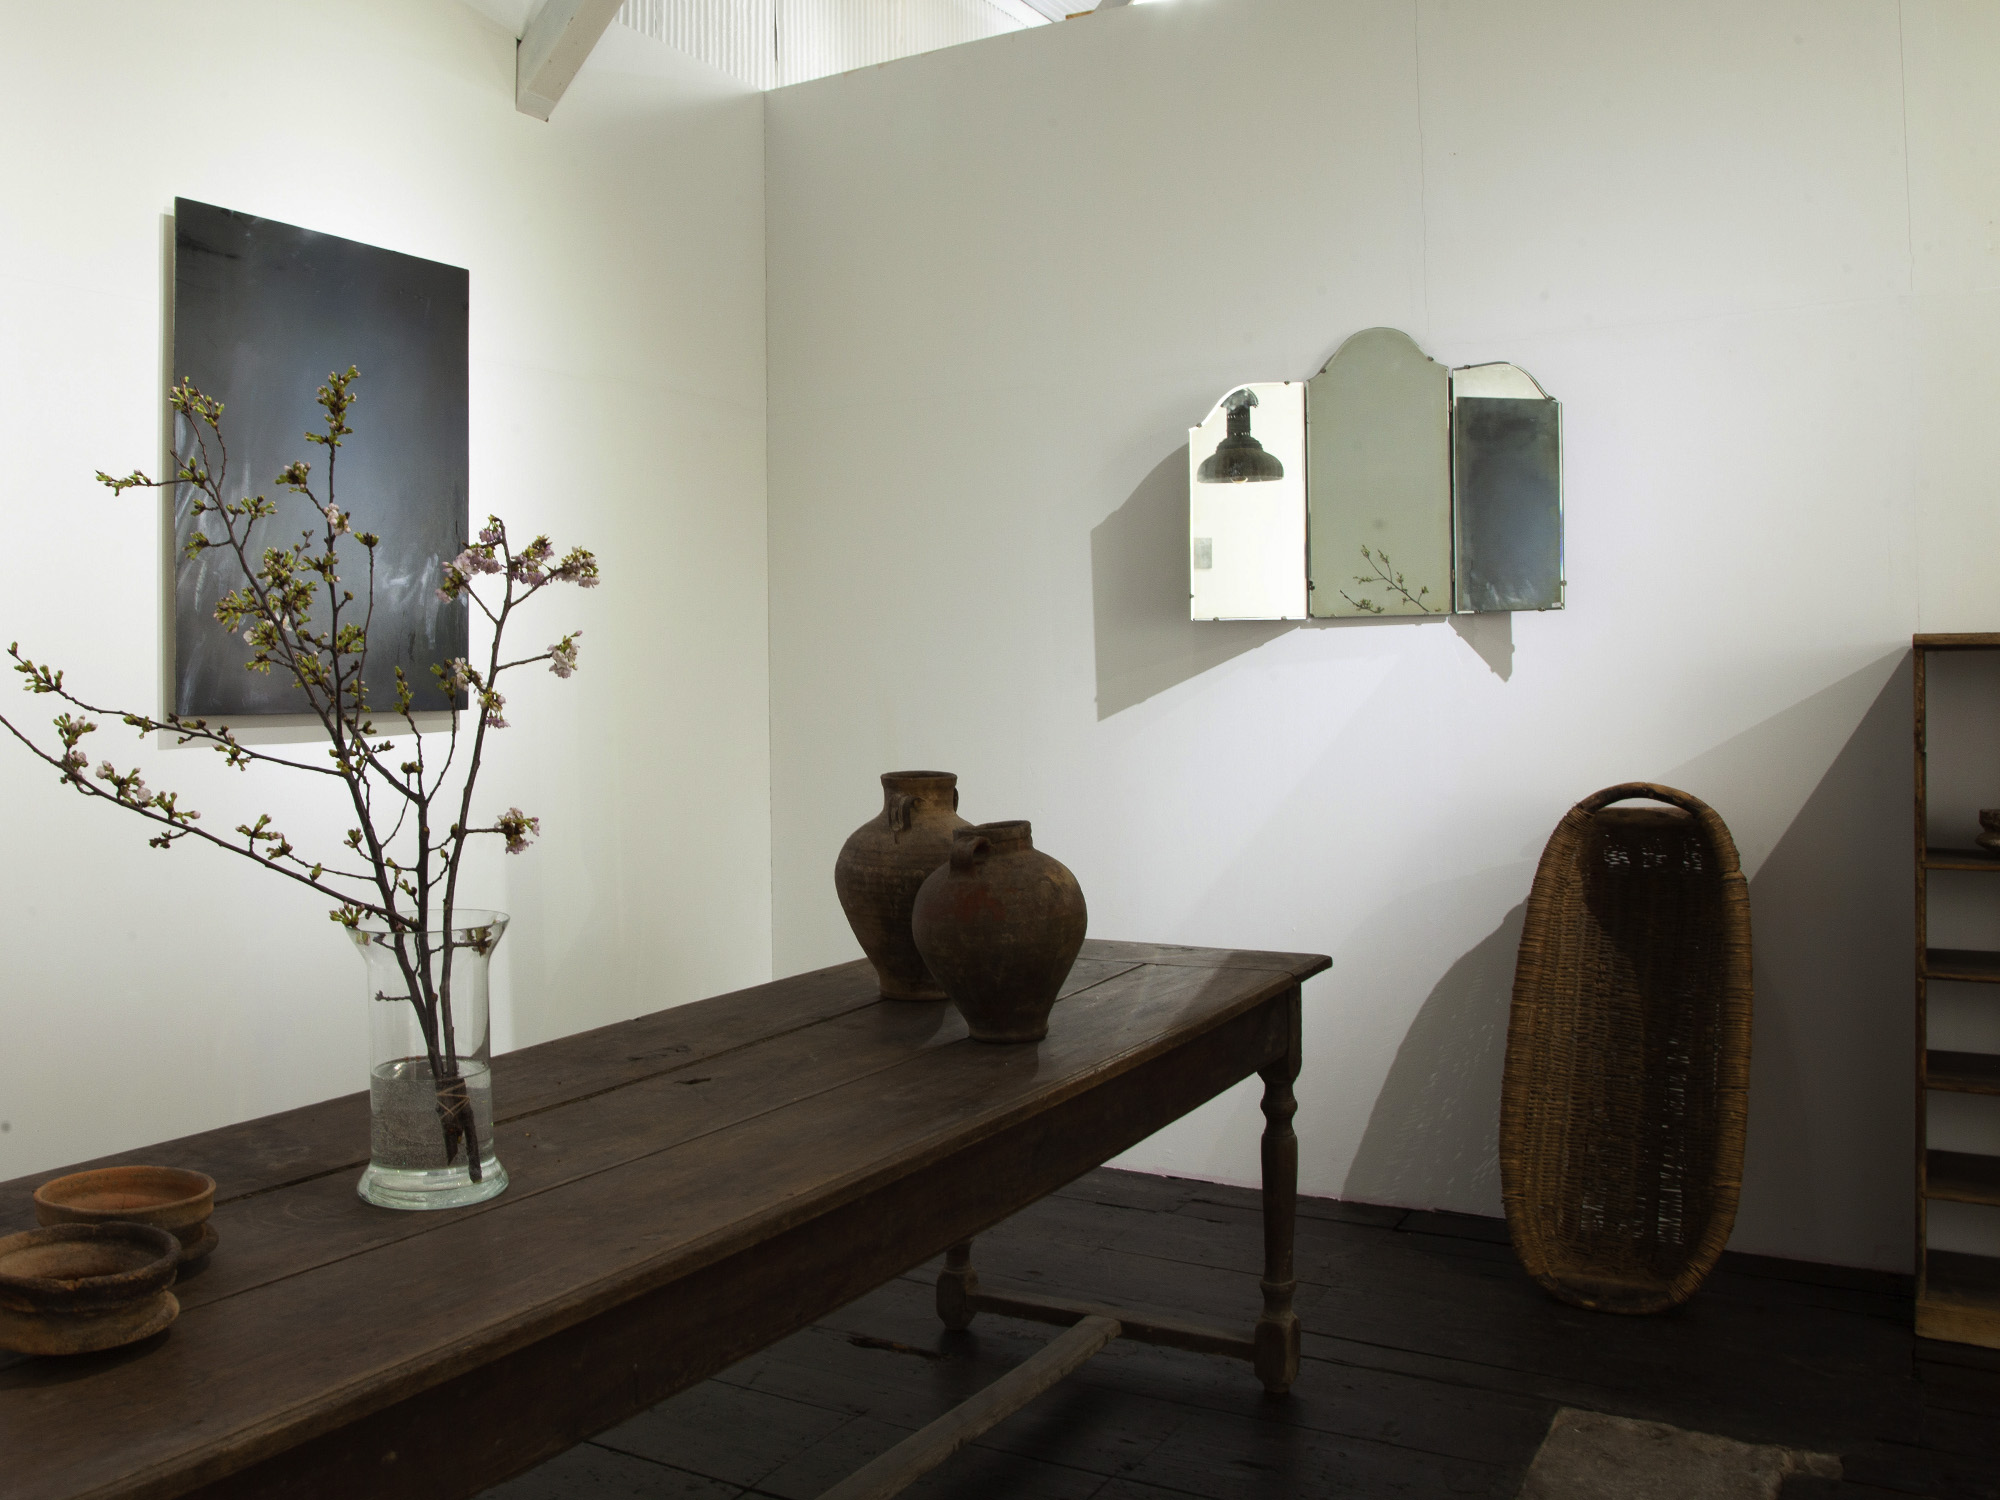 Yasuko Hirano Solo Exhibition “UNFOLD ROOM”